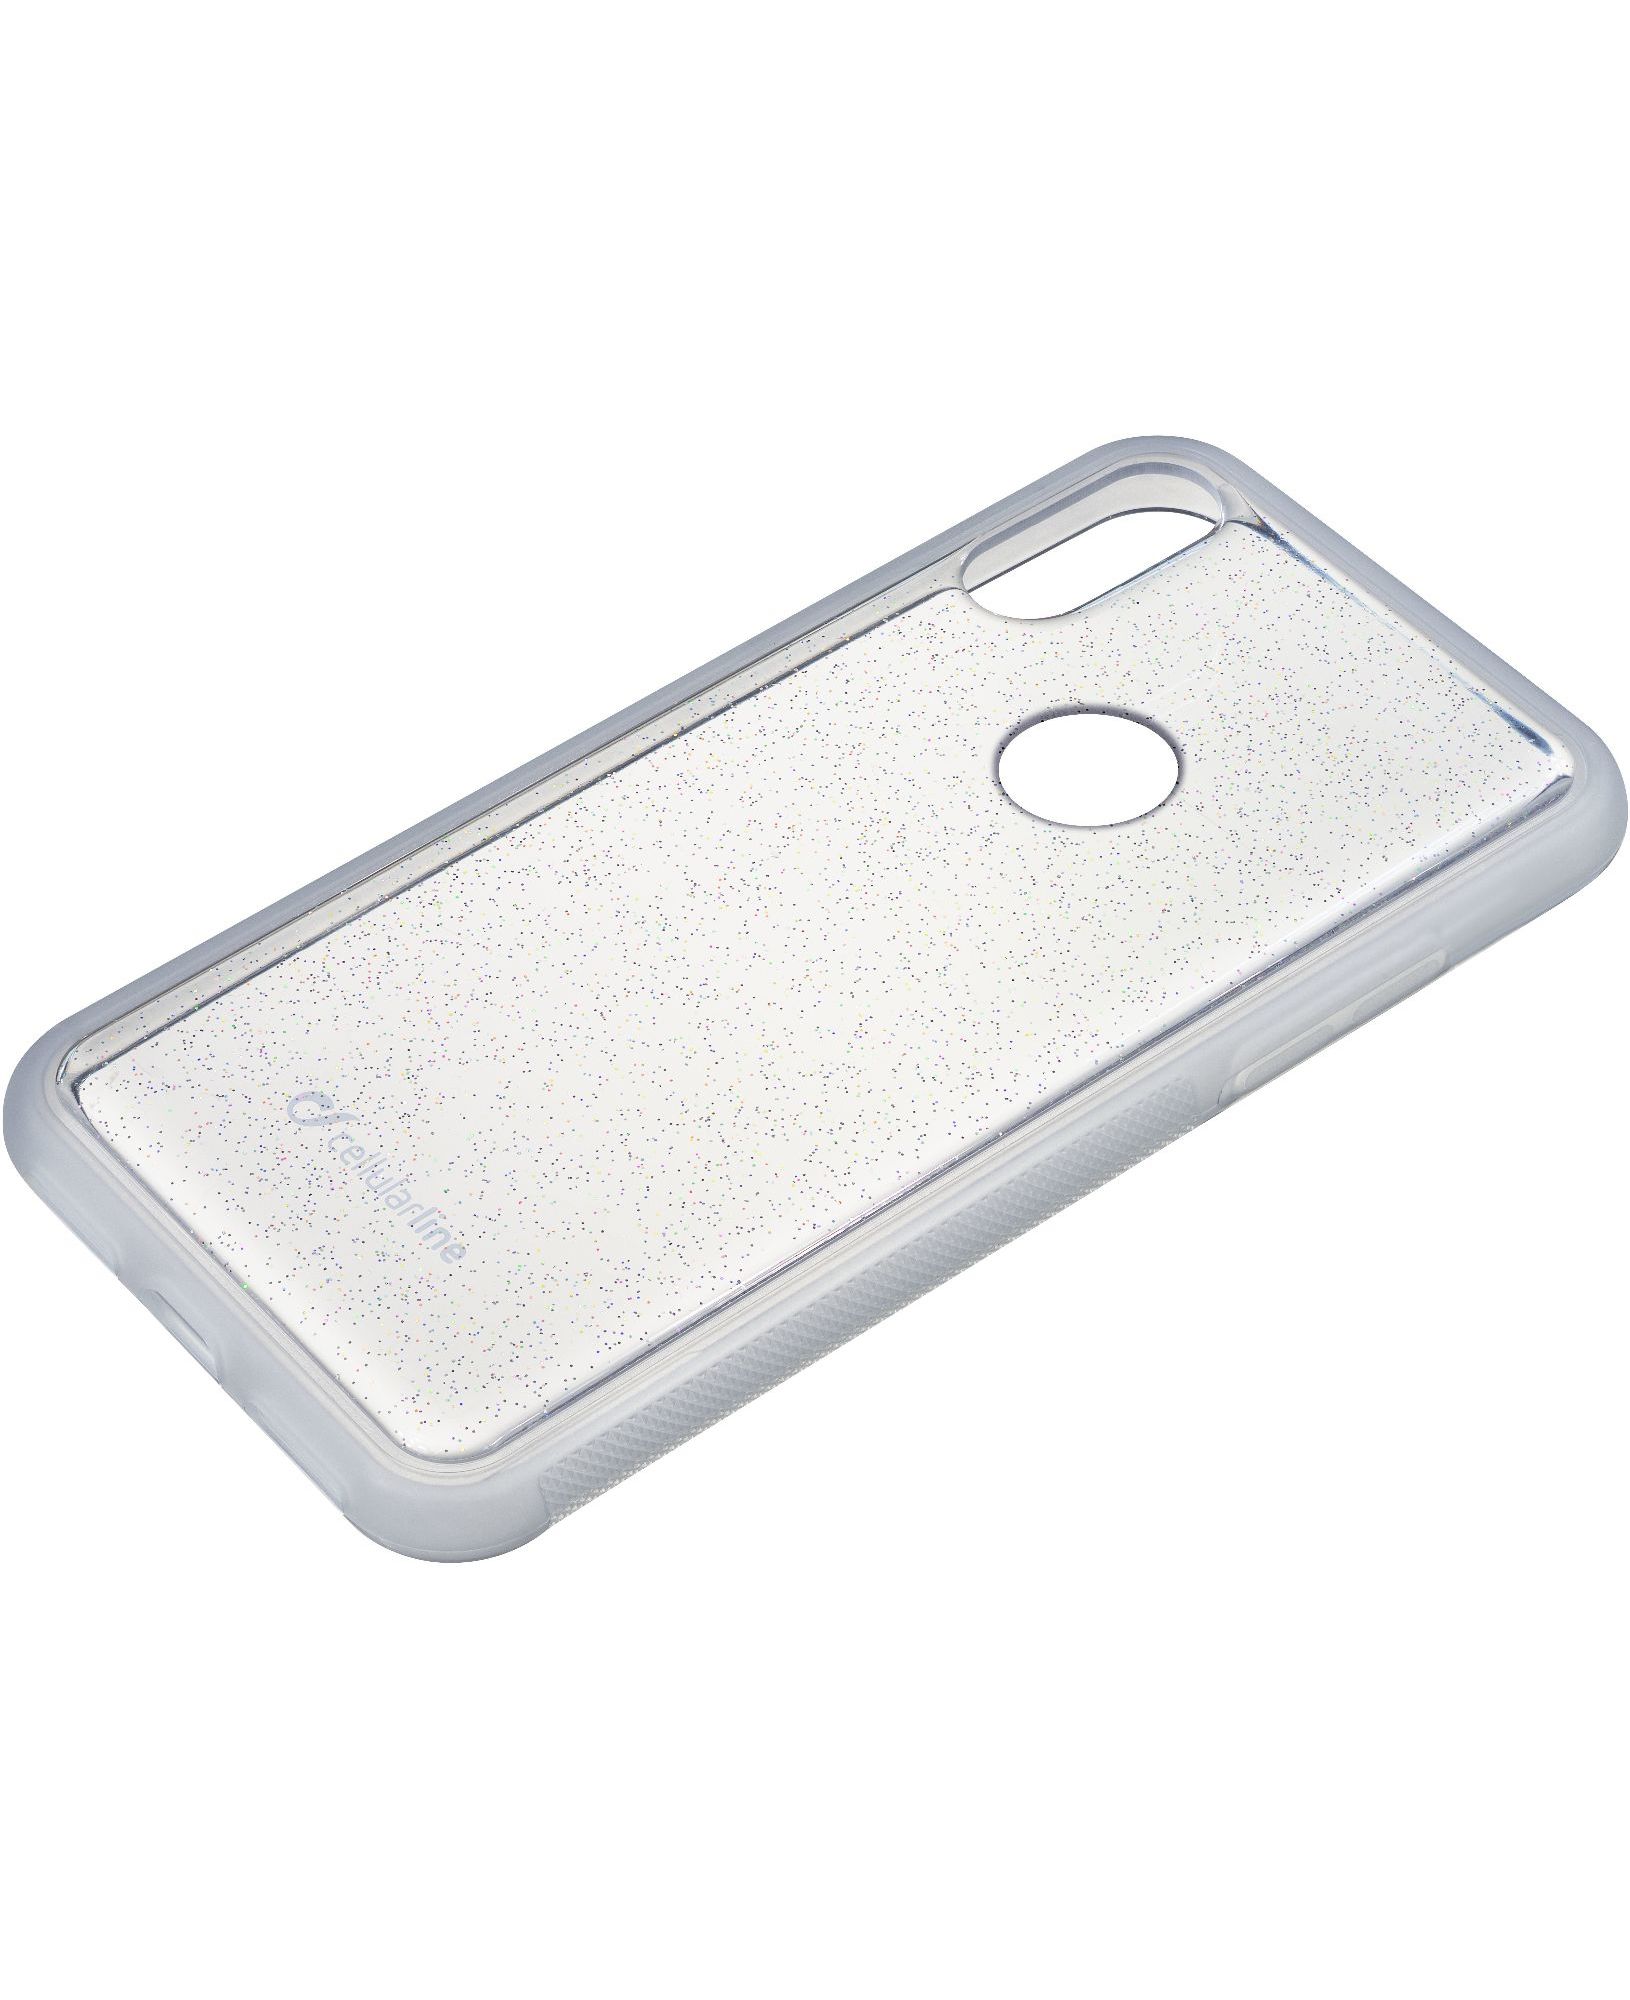 Huawei P20 Lite, case selfie, transparent